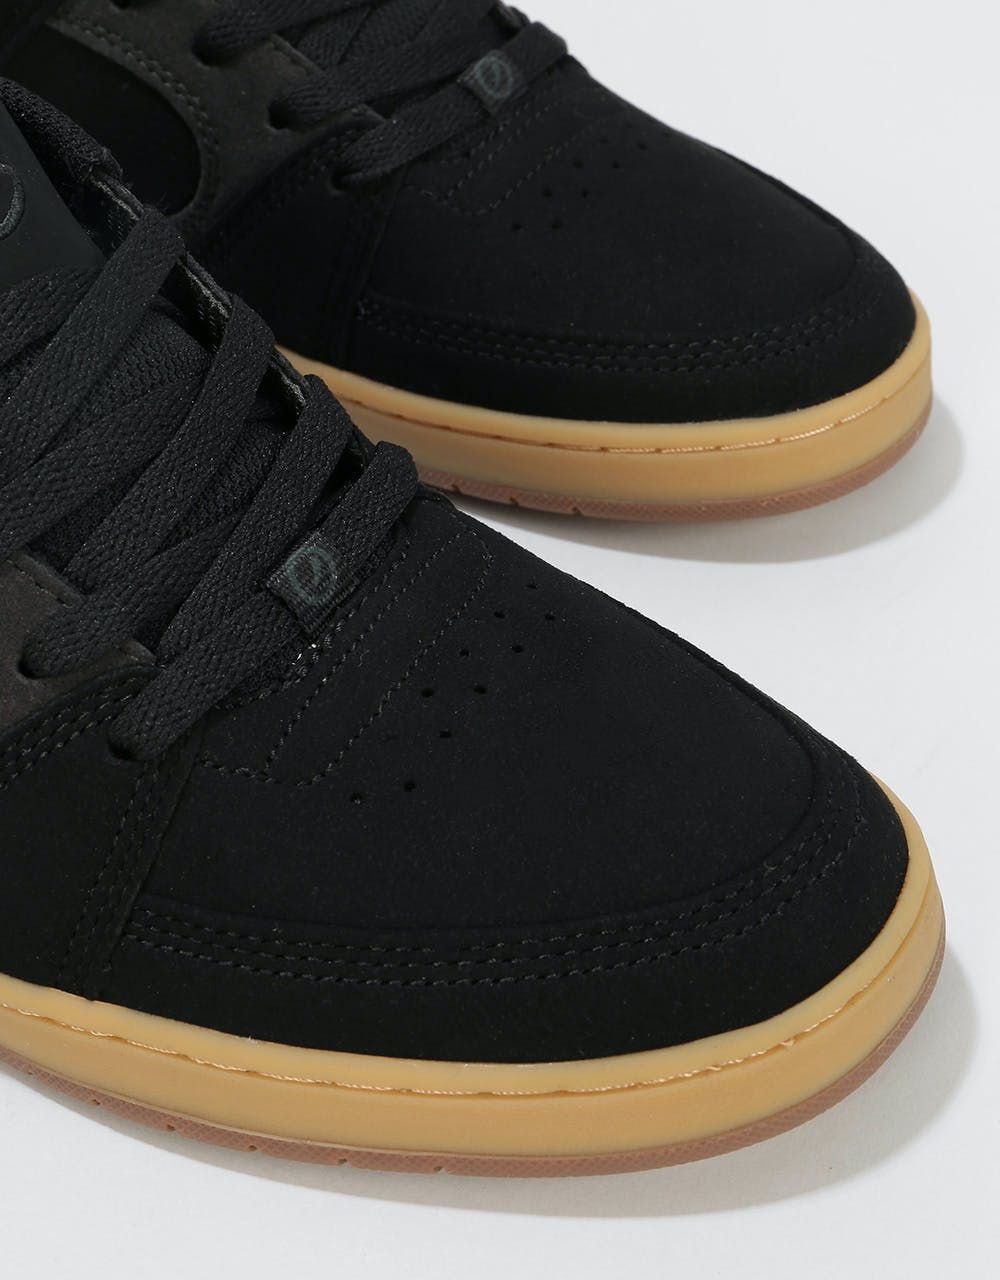 éS Accel Slim Skate Shoes - Black/Grey/Gum